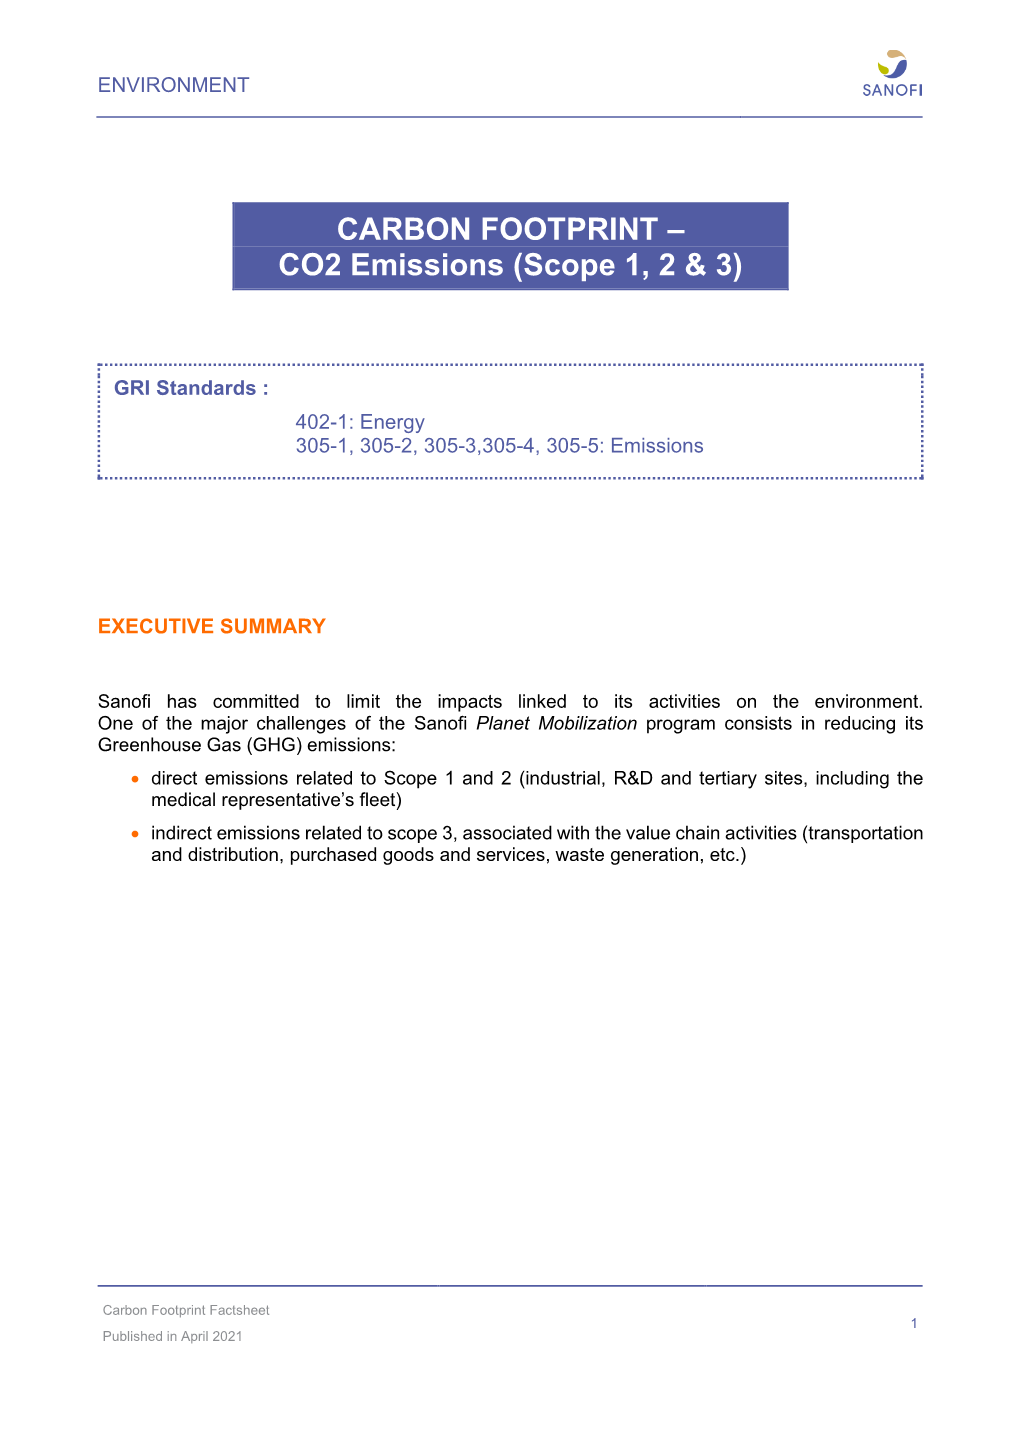 CARBON FOOTPRINT – CO2 Emissions (Scope 1, 2 & 3)